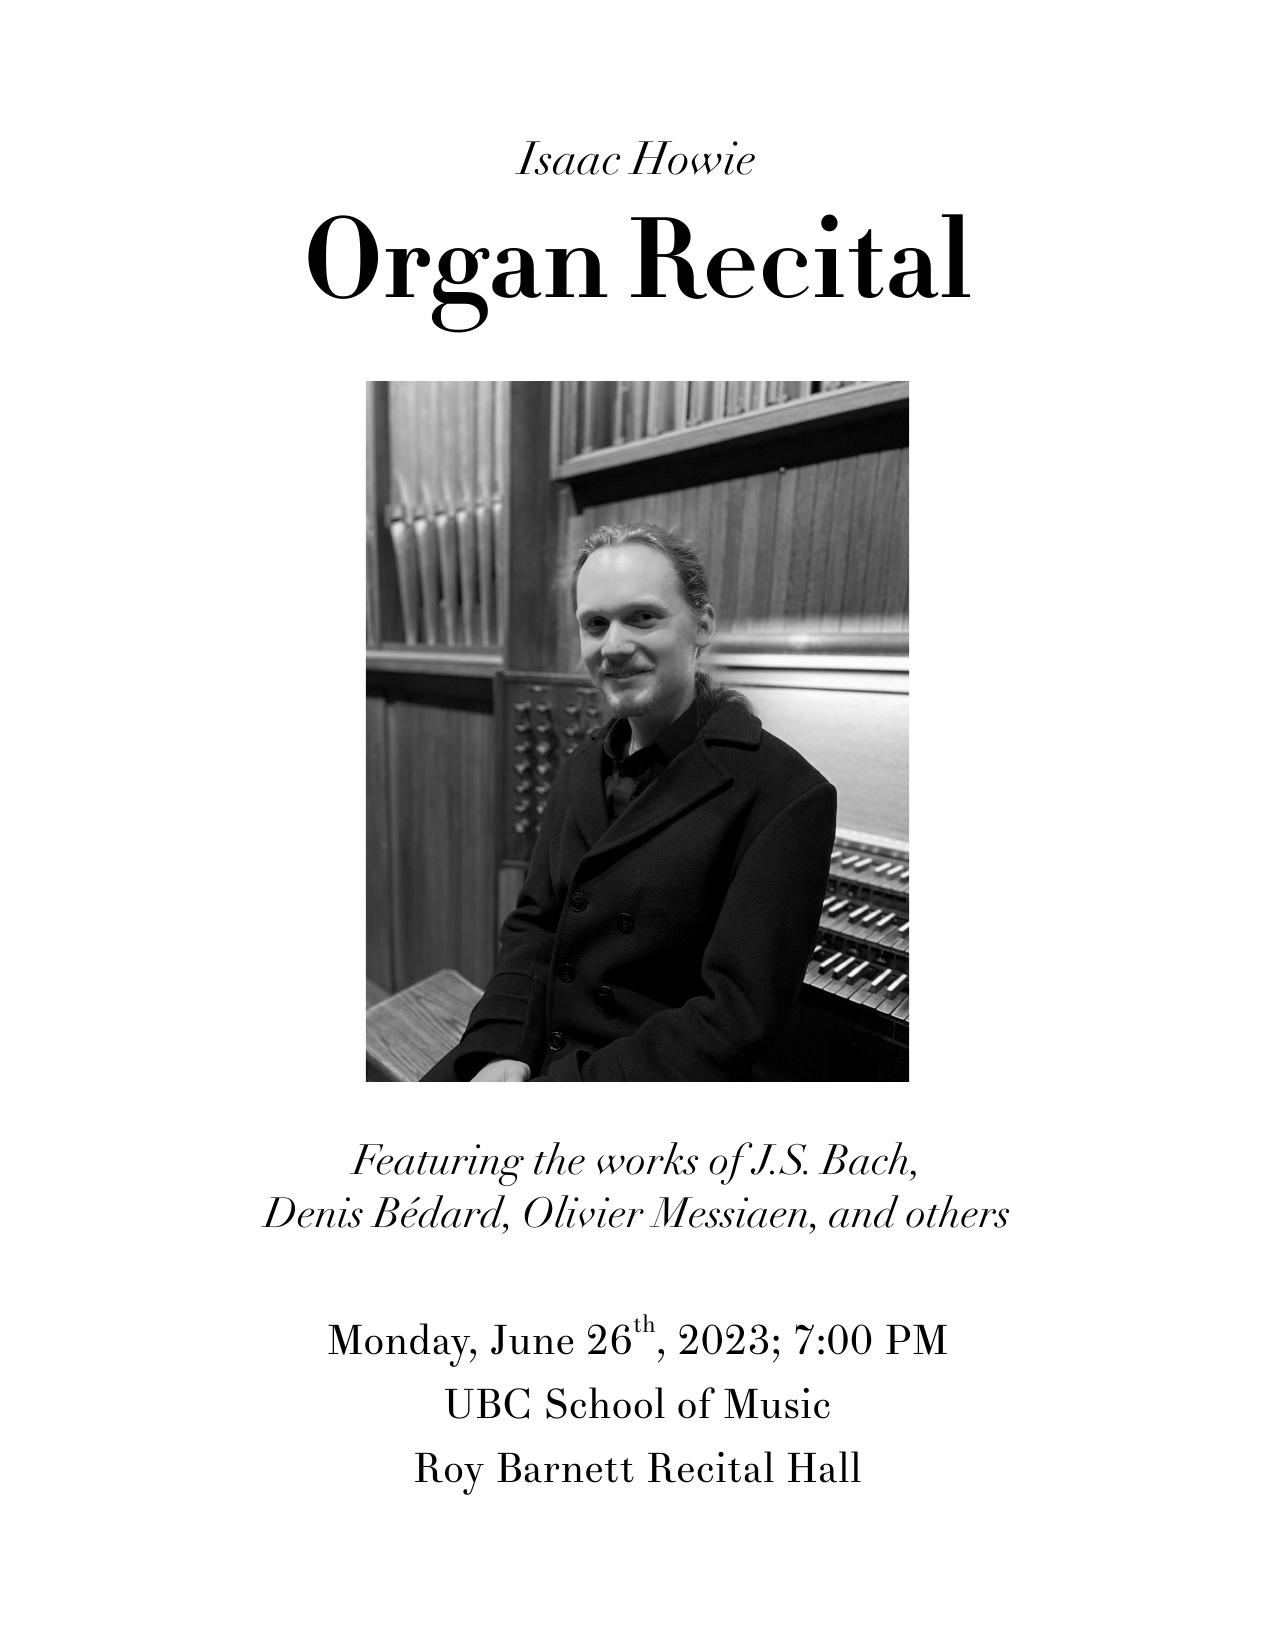 Organist Isaac Howie in Concert @ Roy Barnett Recital Hall, UBC School of Music